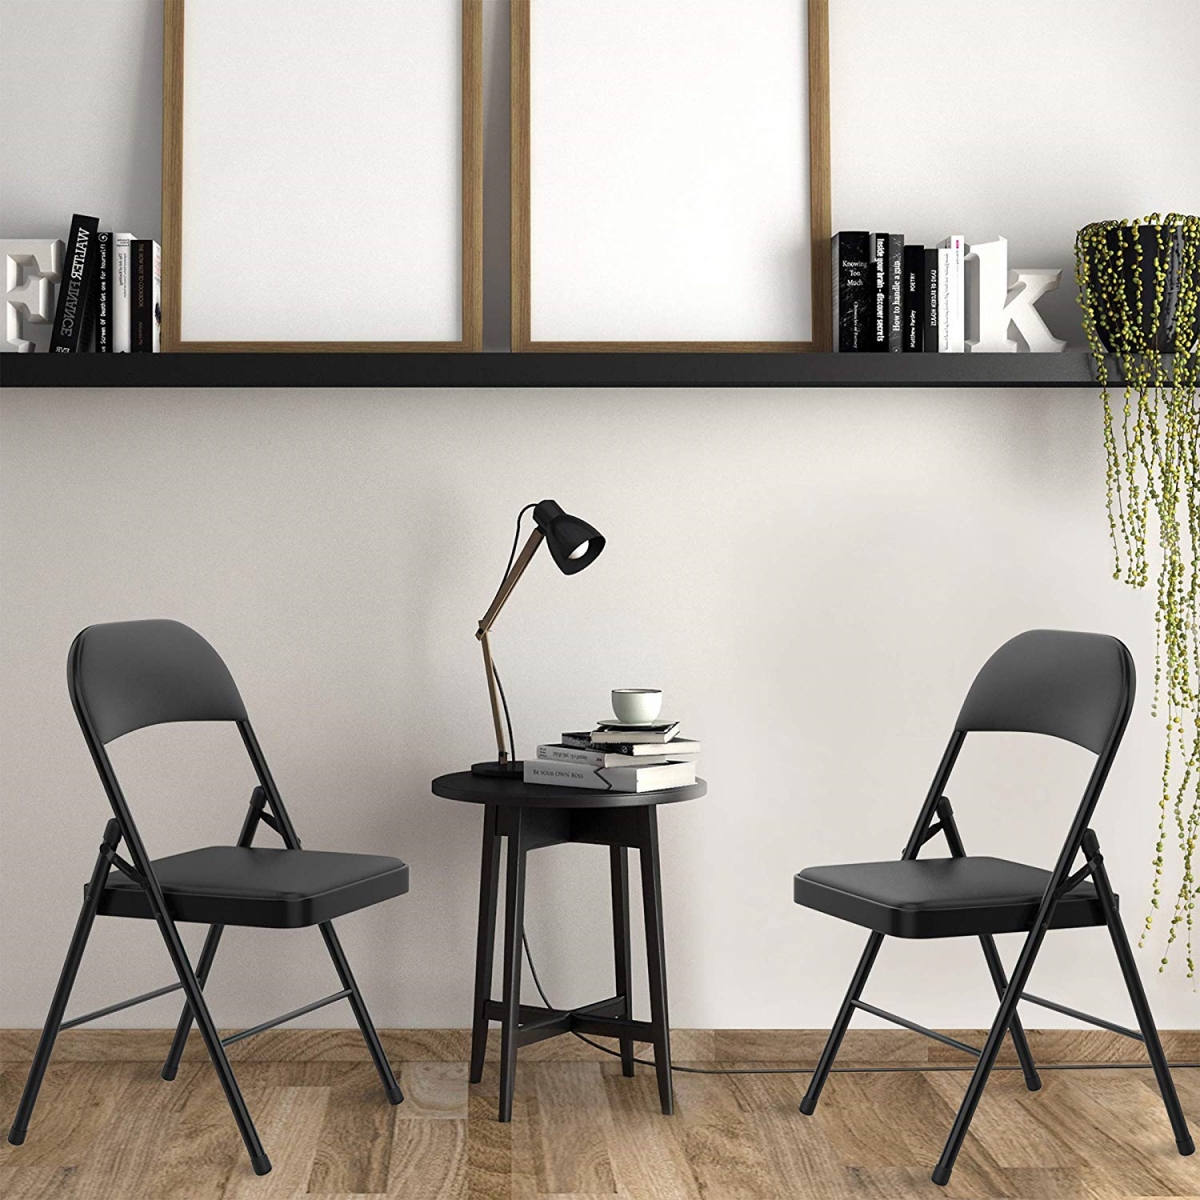 Lavish Home A022285 Folding Chairs, Black, 2 Piece